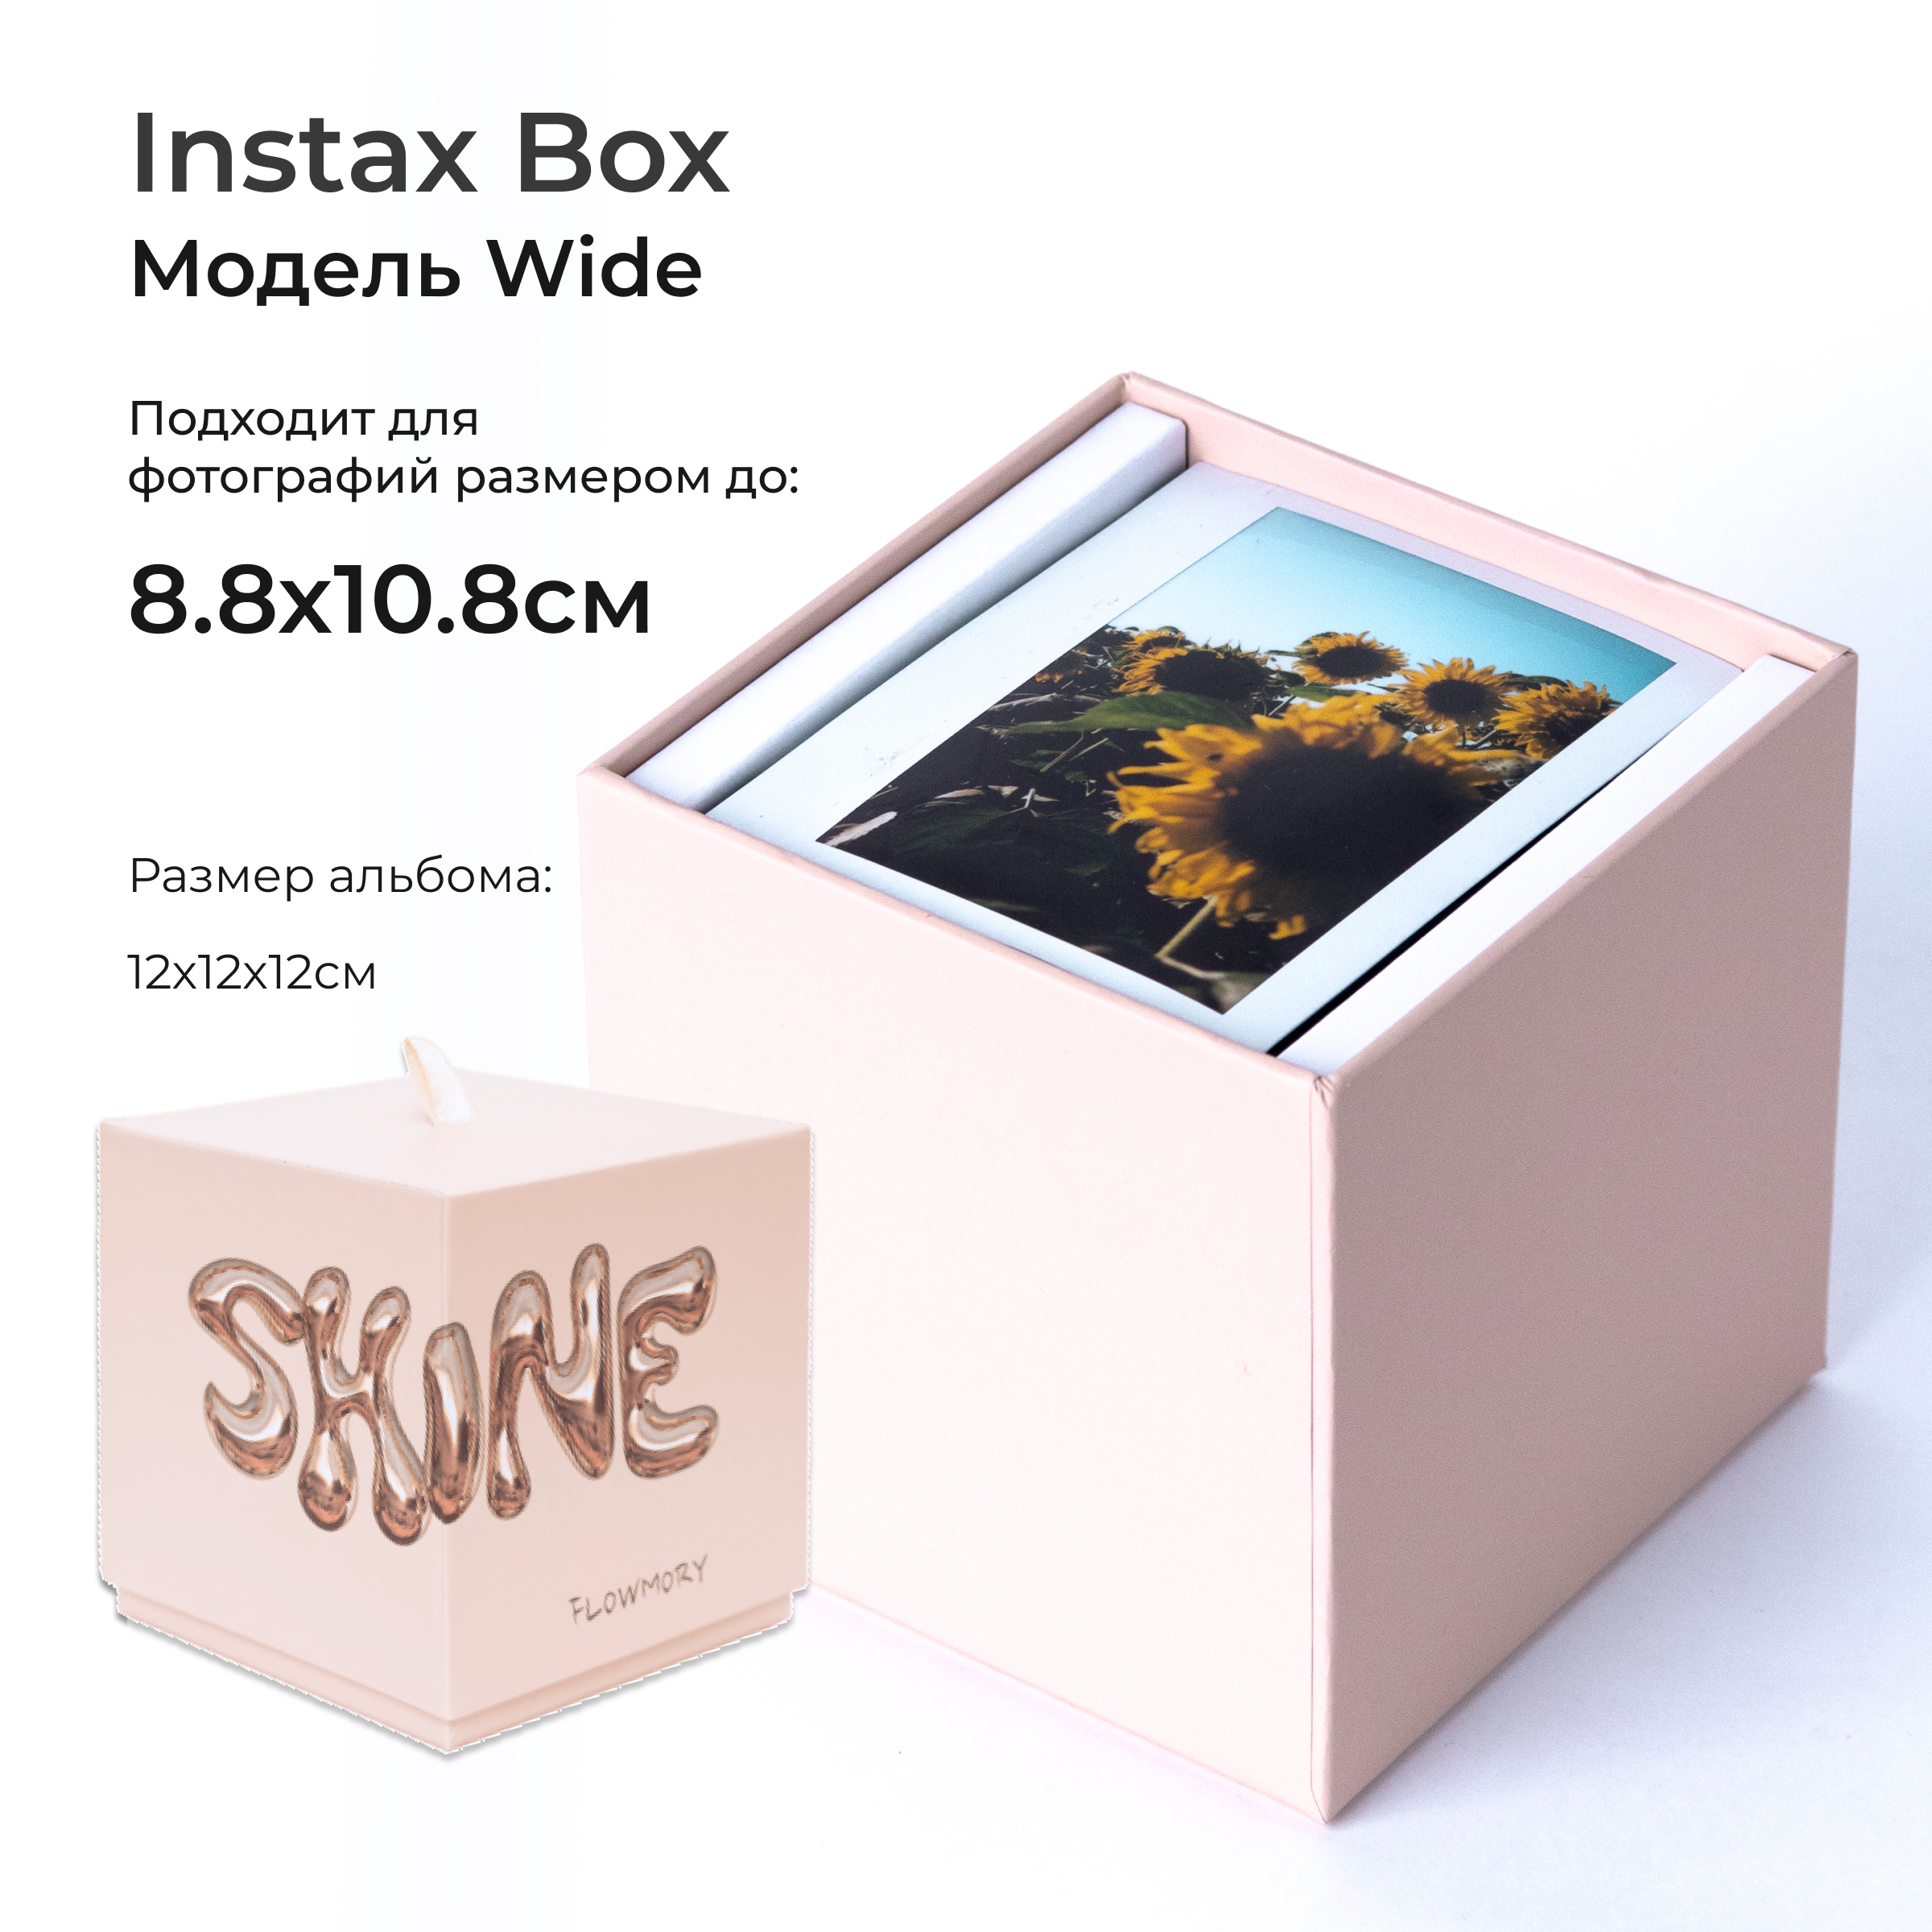 Фотоальбом FLOWMORY SHINE wide коробочка для instax и polaroid фотографий